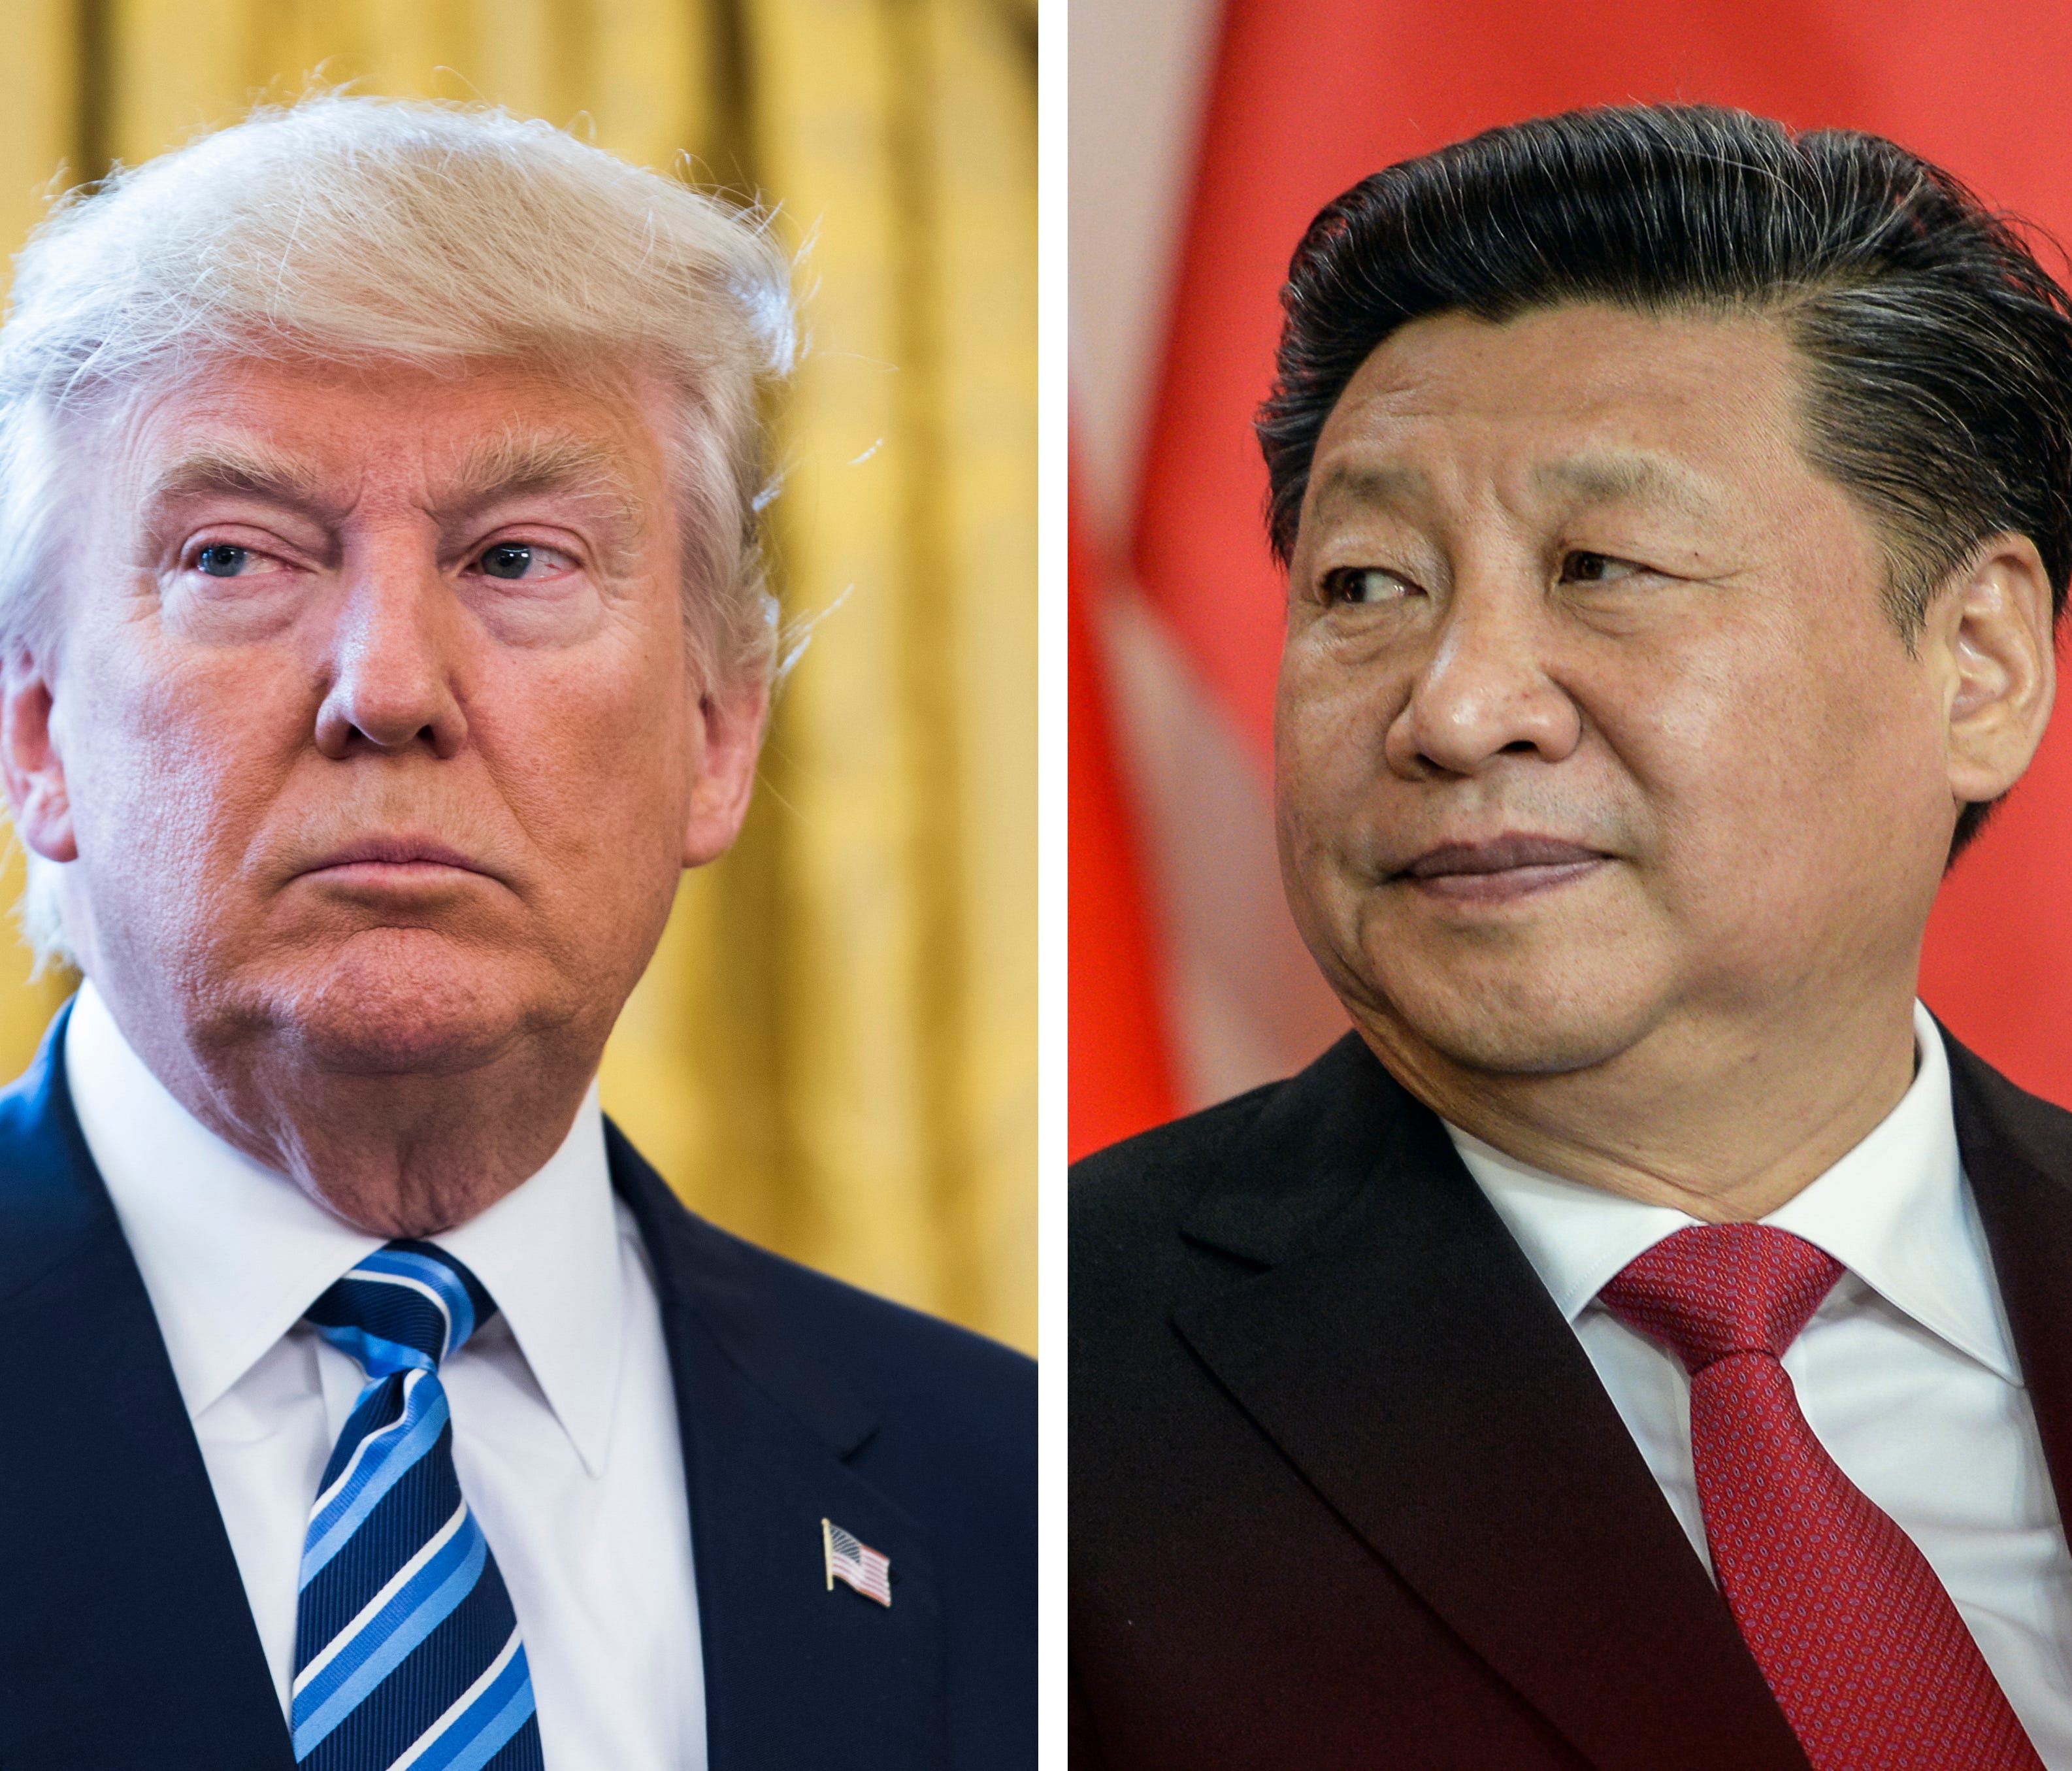 President Trump and China President Xi Jinping